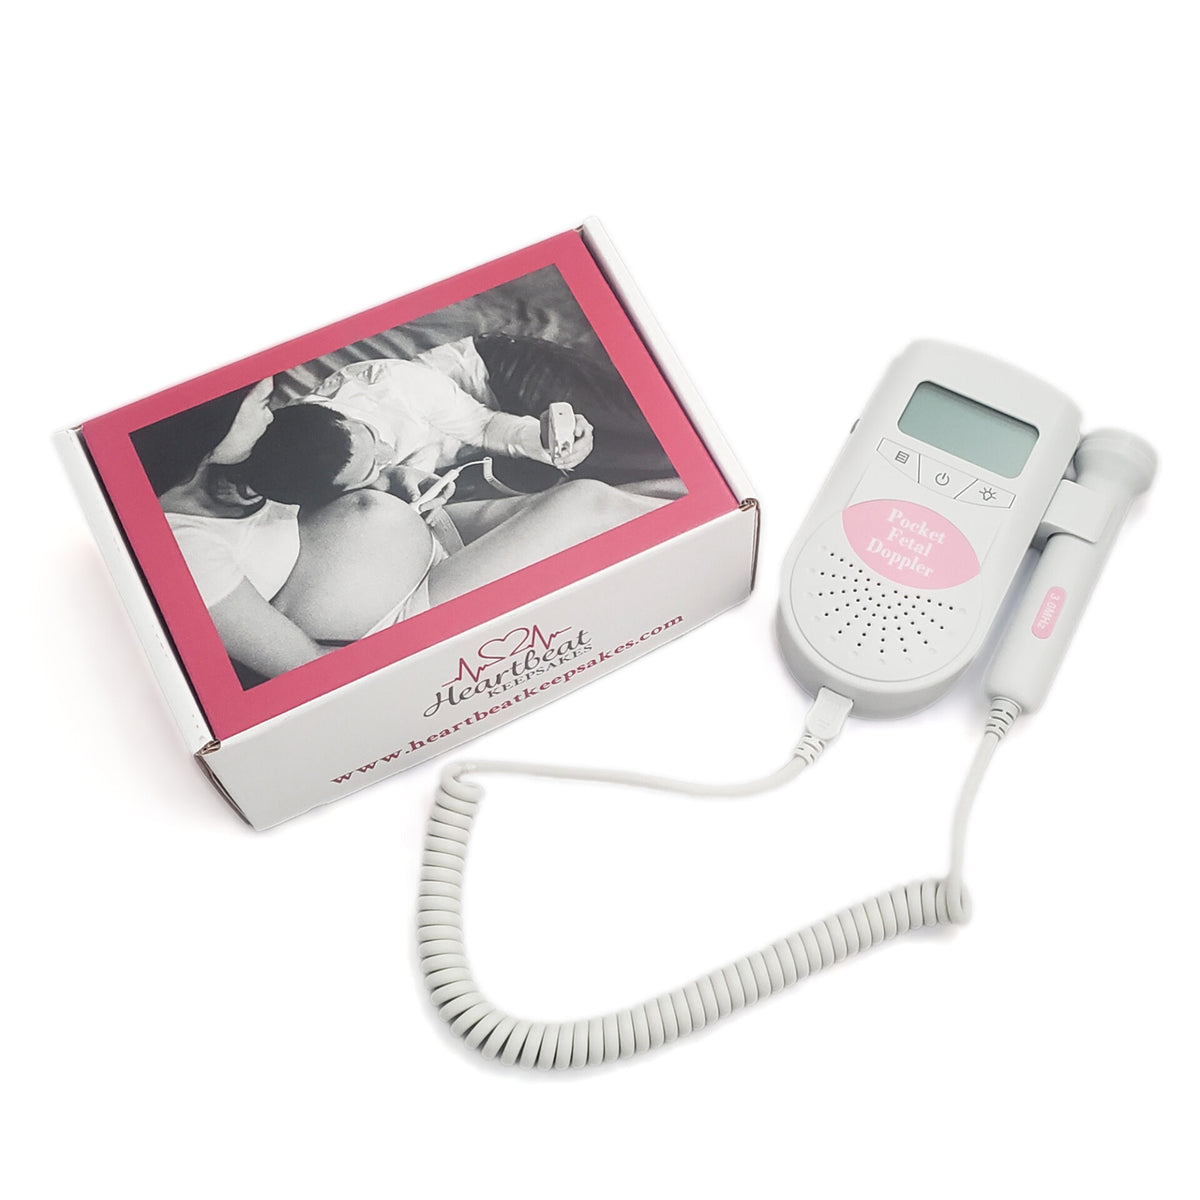 Buy Sonoline B Fetal Doppler Pink in USA